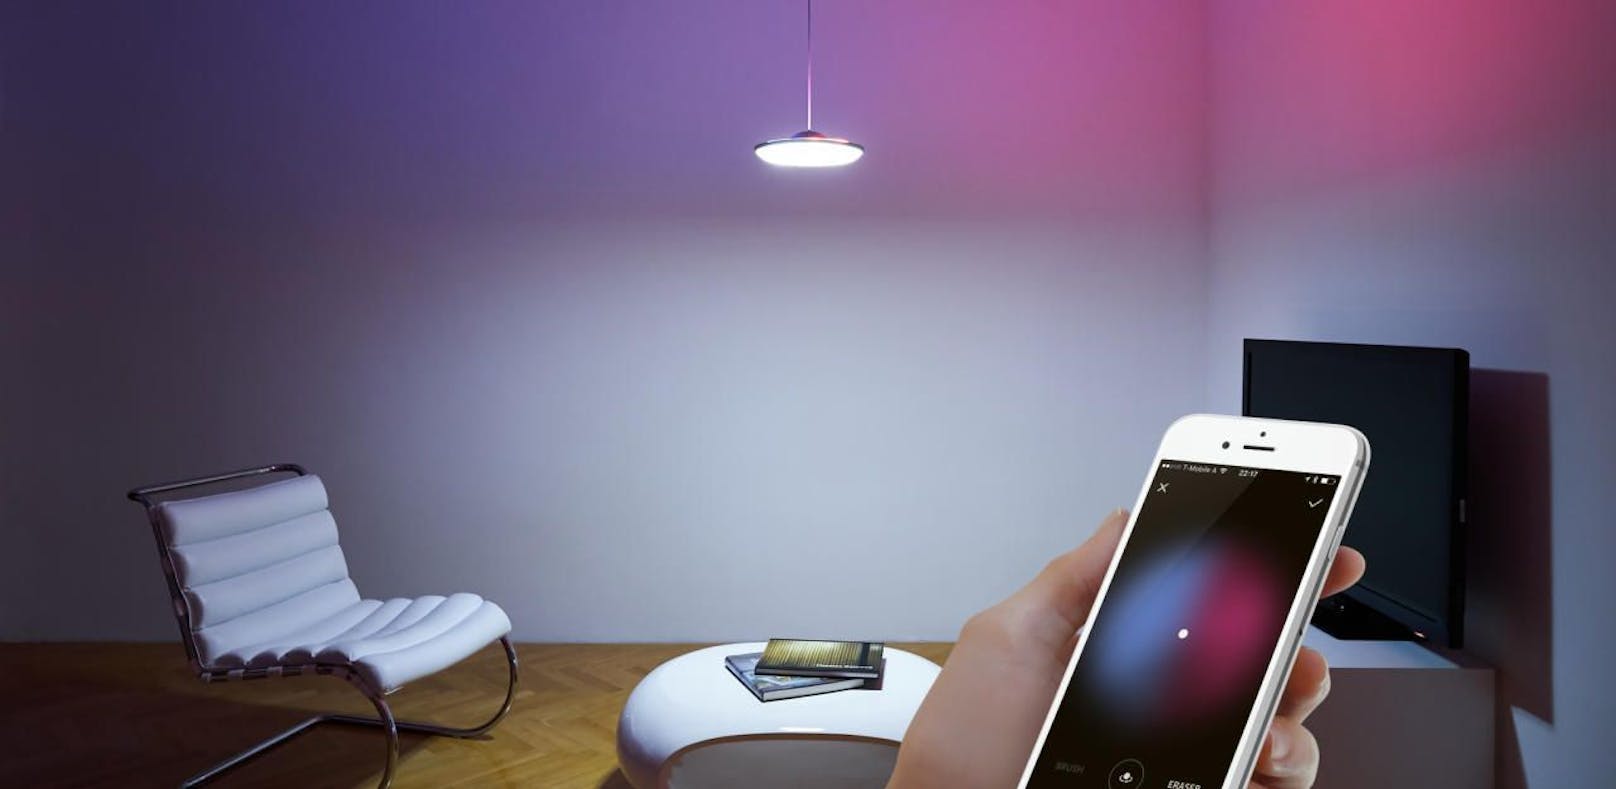 Luke Roberts - The World?s First Smart Design Lamp